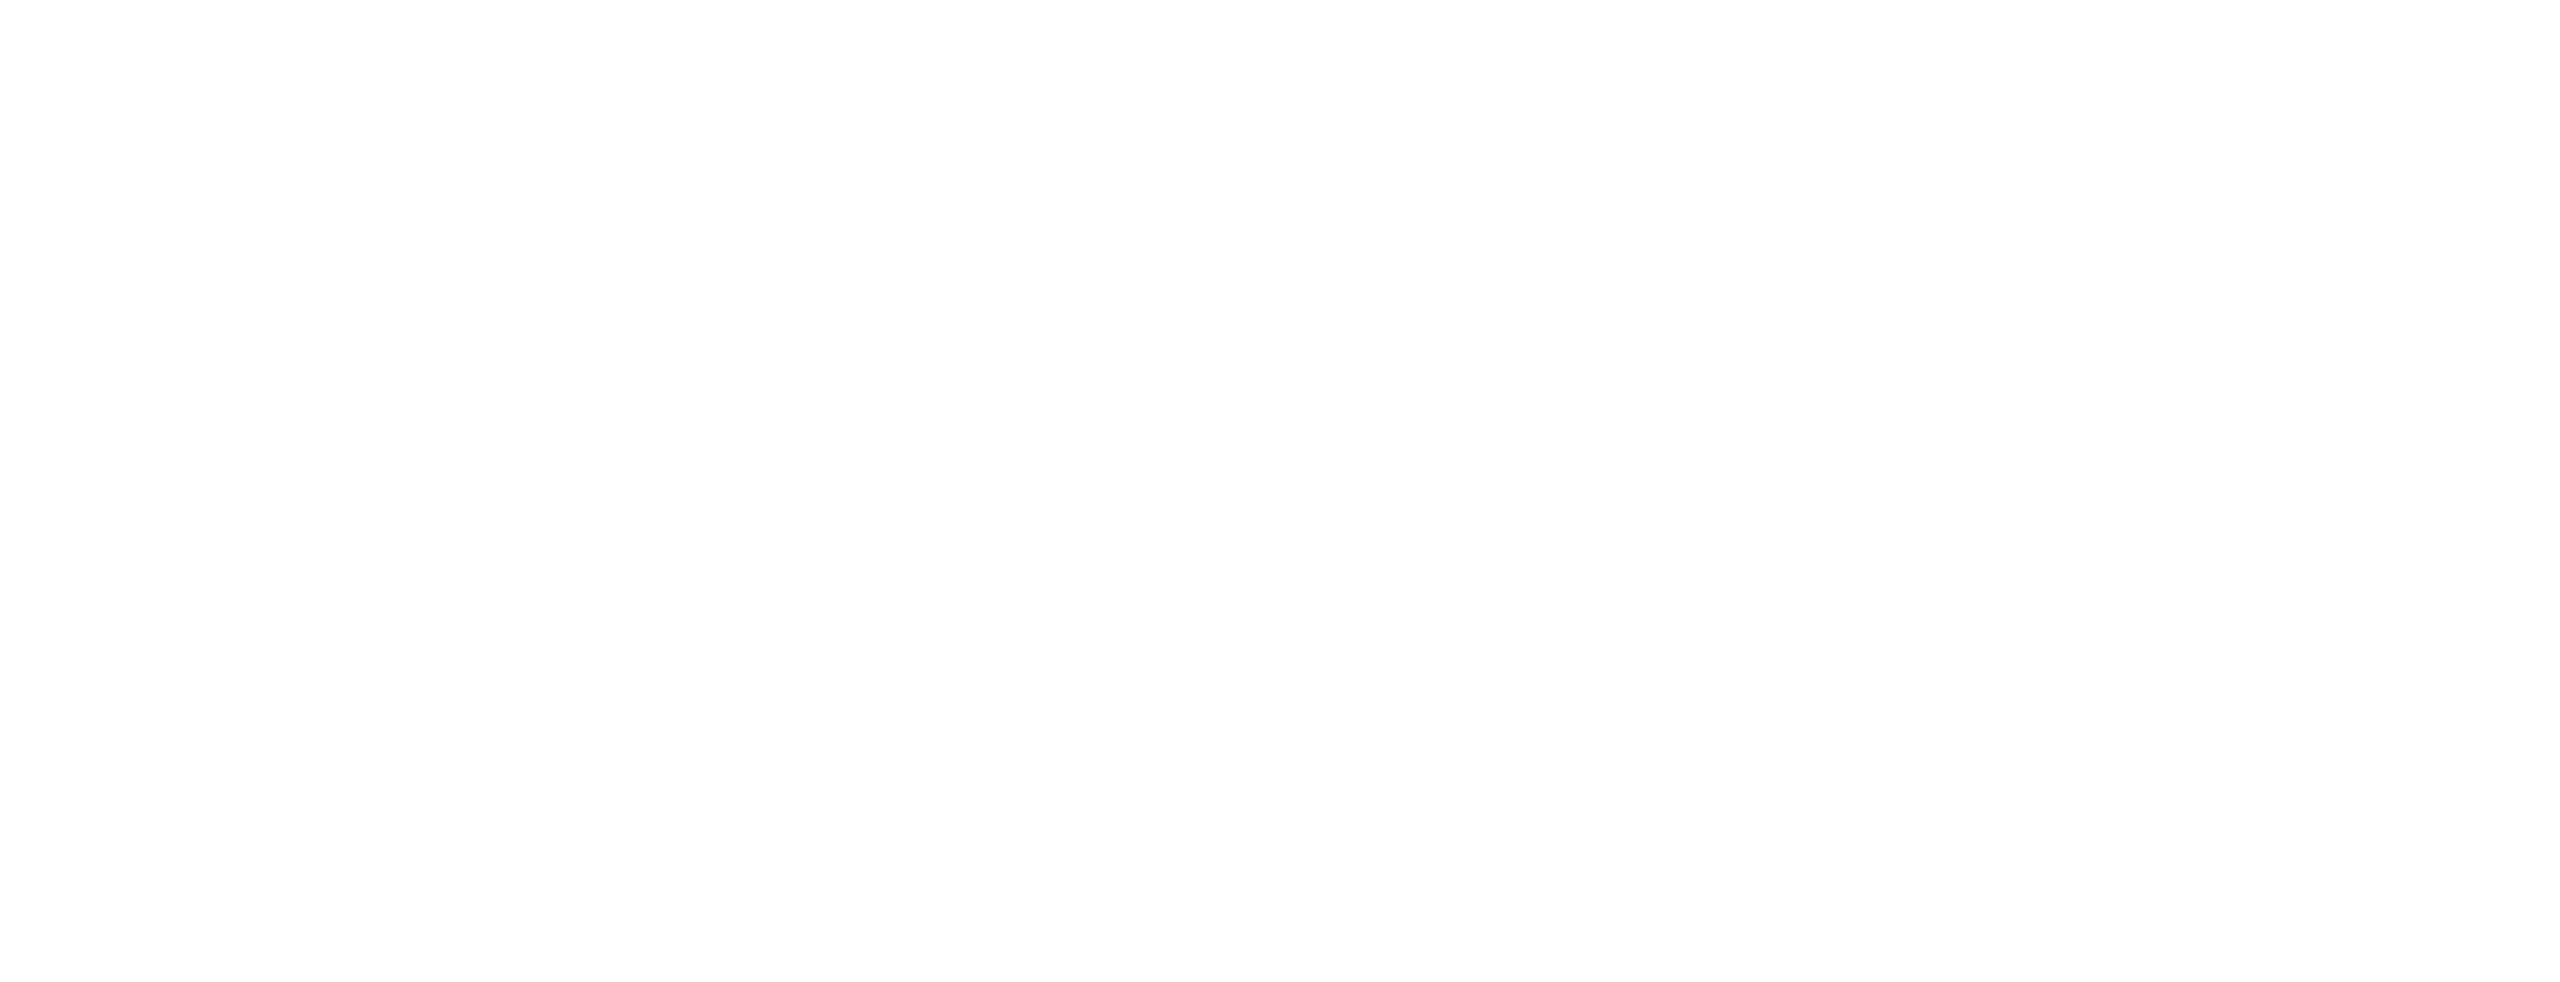 Restauracja Basztowa logo